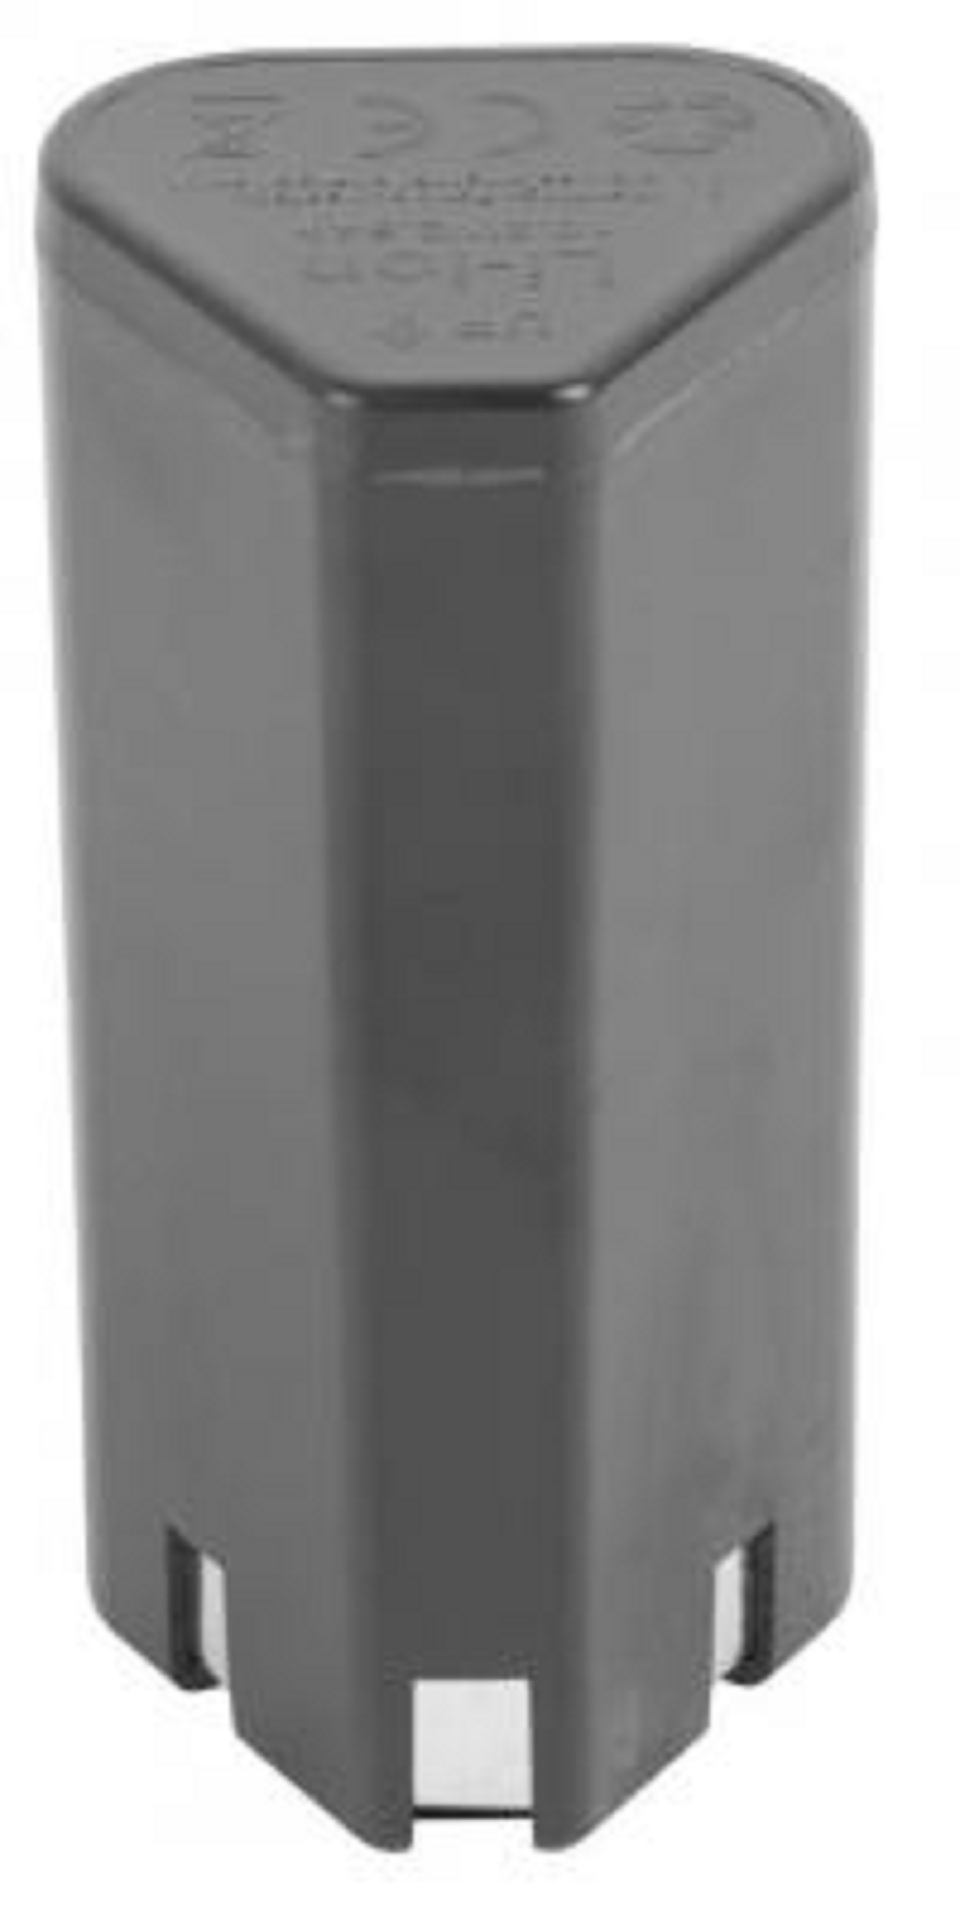 TOMMY Akku Drucksprühgerät 8 Liter | 54 cm Sprühlanze | Doppelpack Li-Ion Batterie mit Ladegerät | Drucksprüher, Gartenspritze, Sprühgerät, Sprühflasche, Unkrautspritze